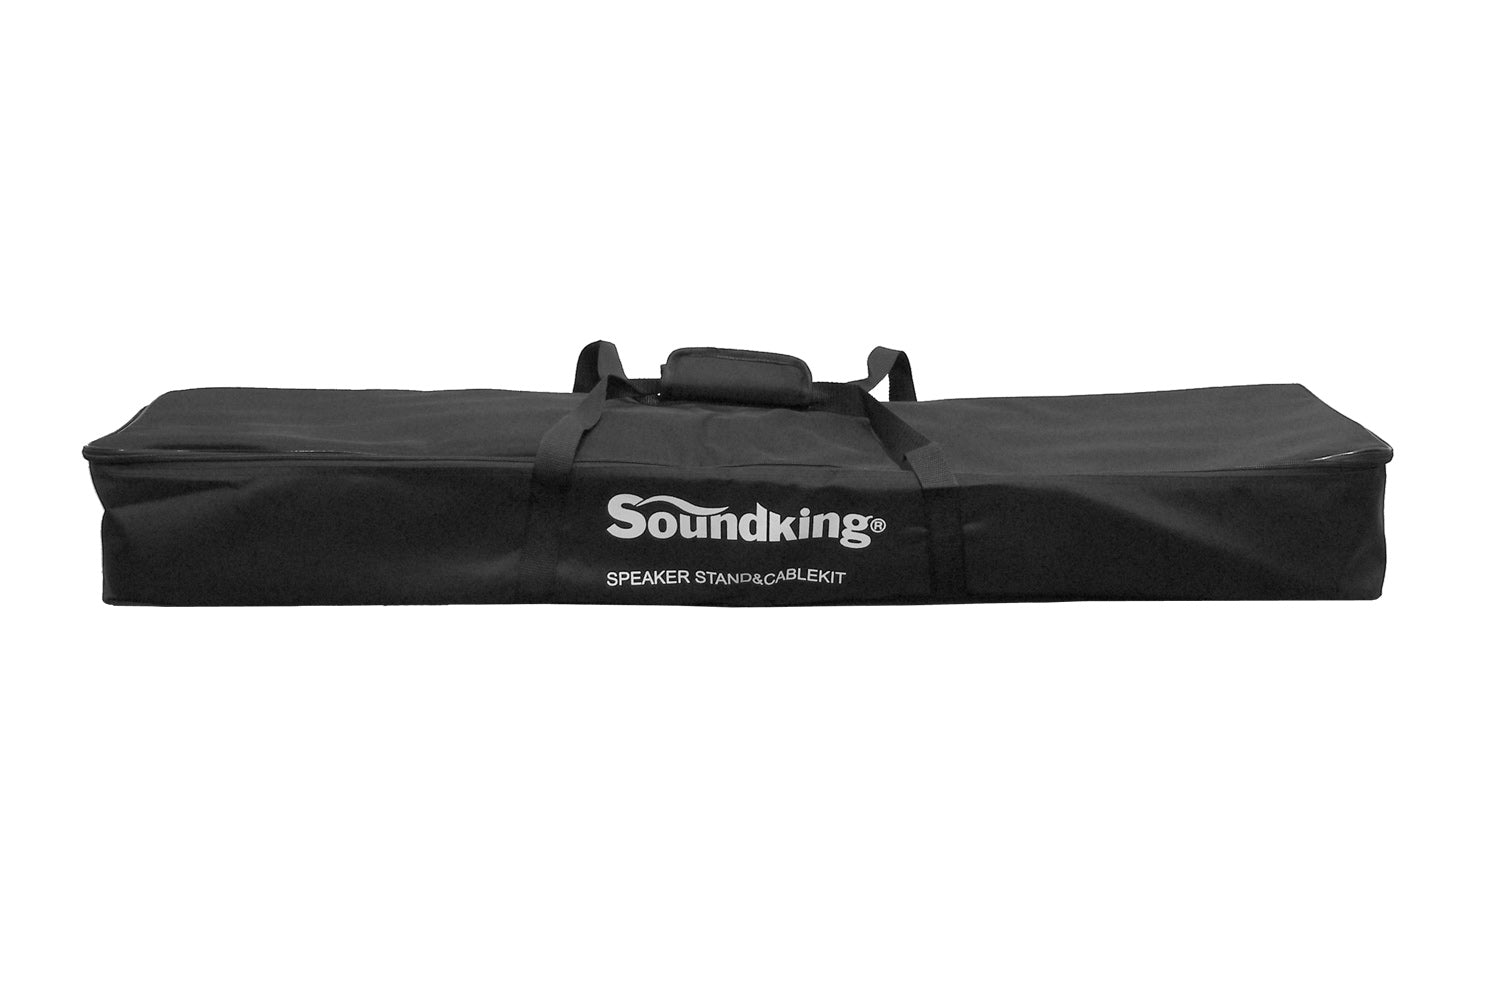 SoundKing DI009 - Speaker Bag for 2 x speaker stands - 1100x280x140mm